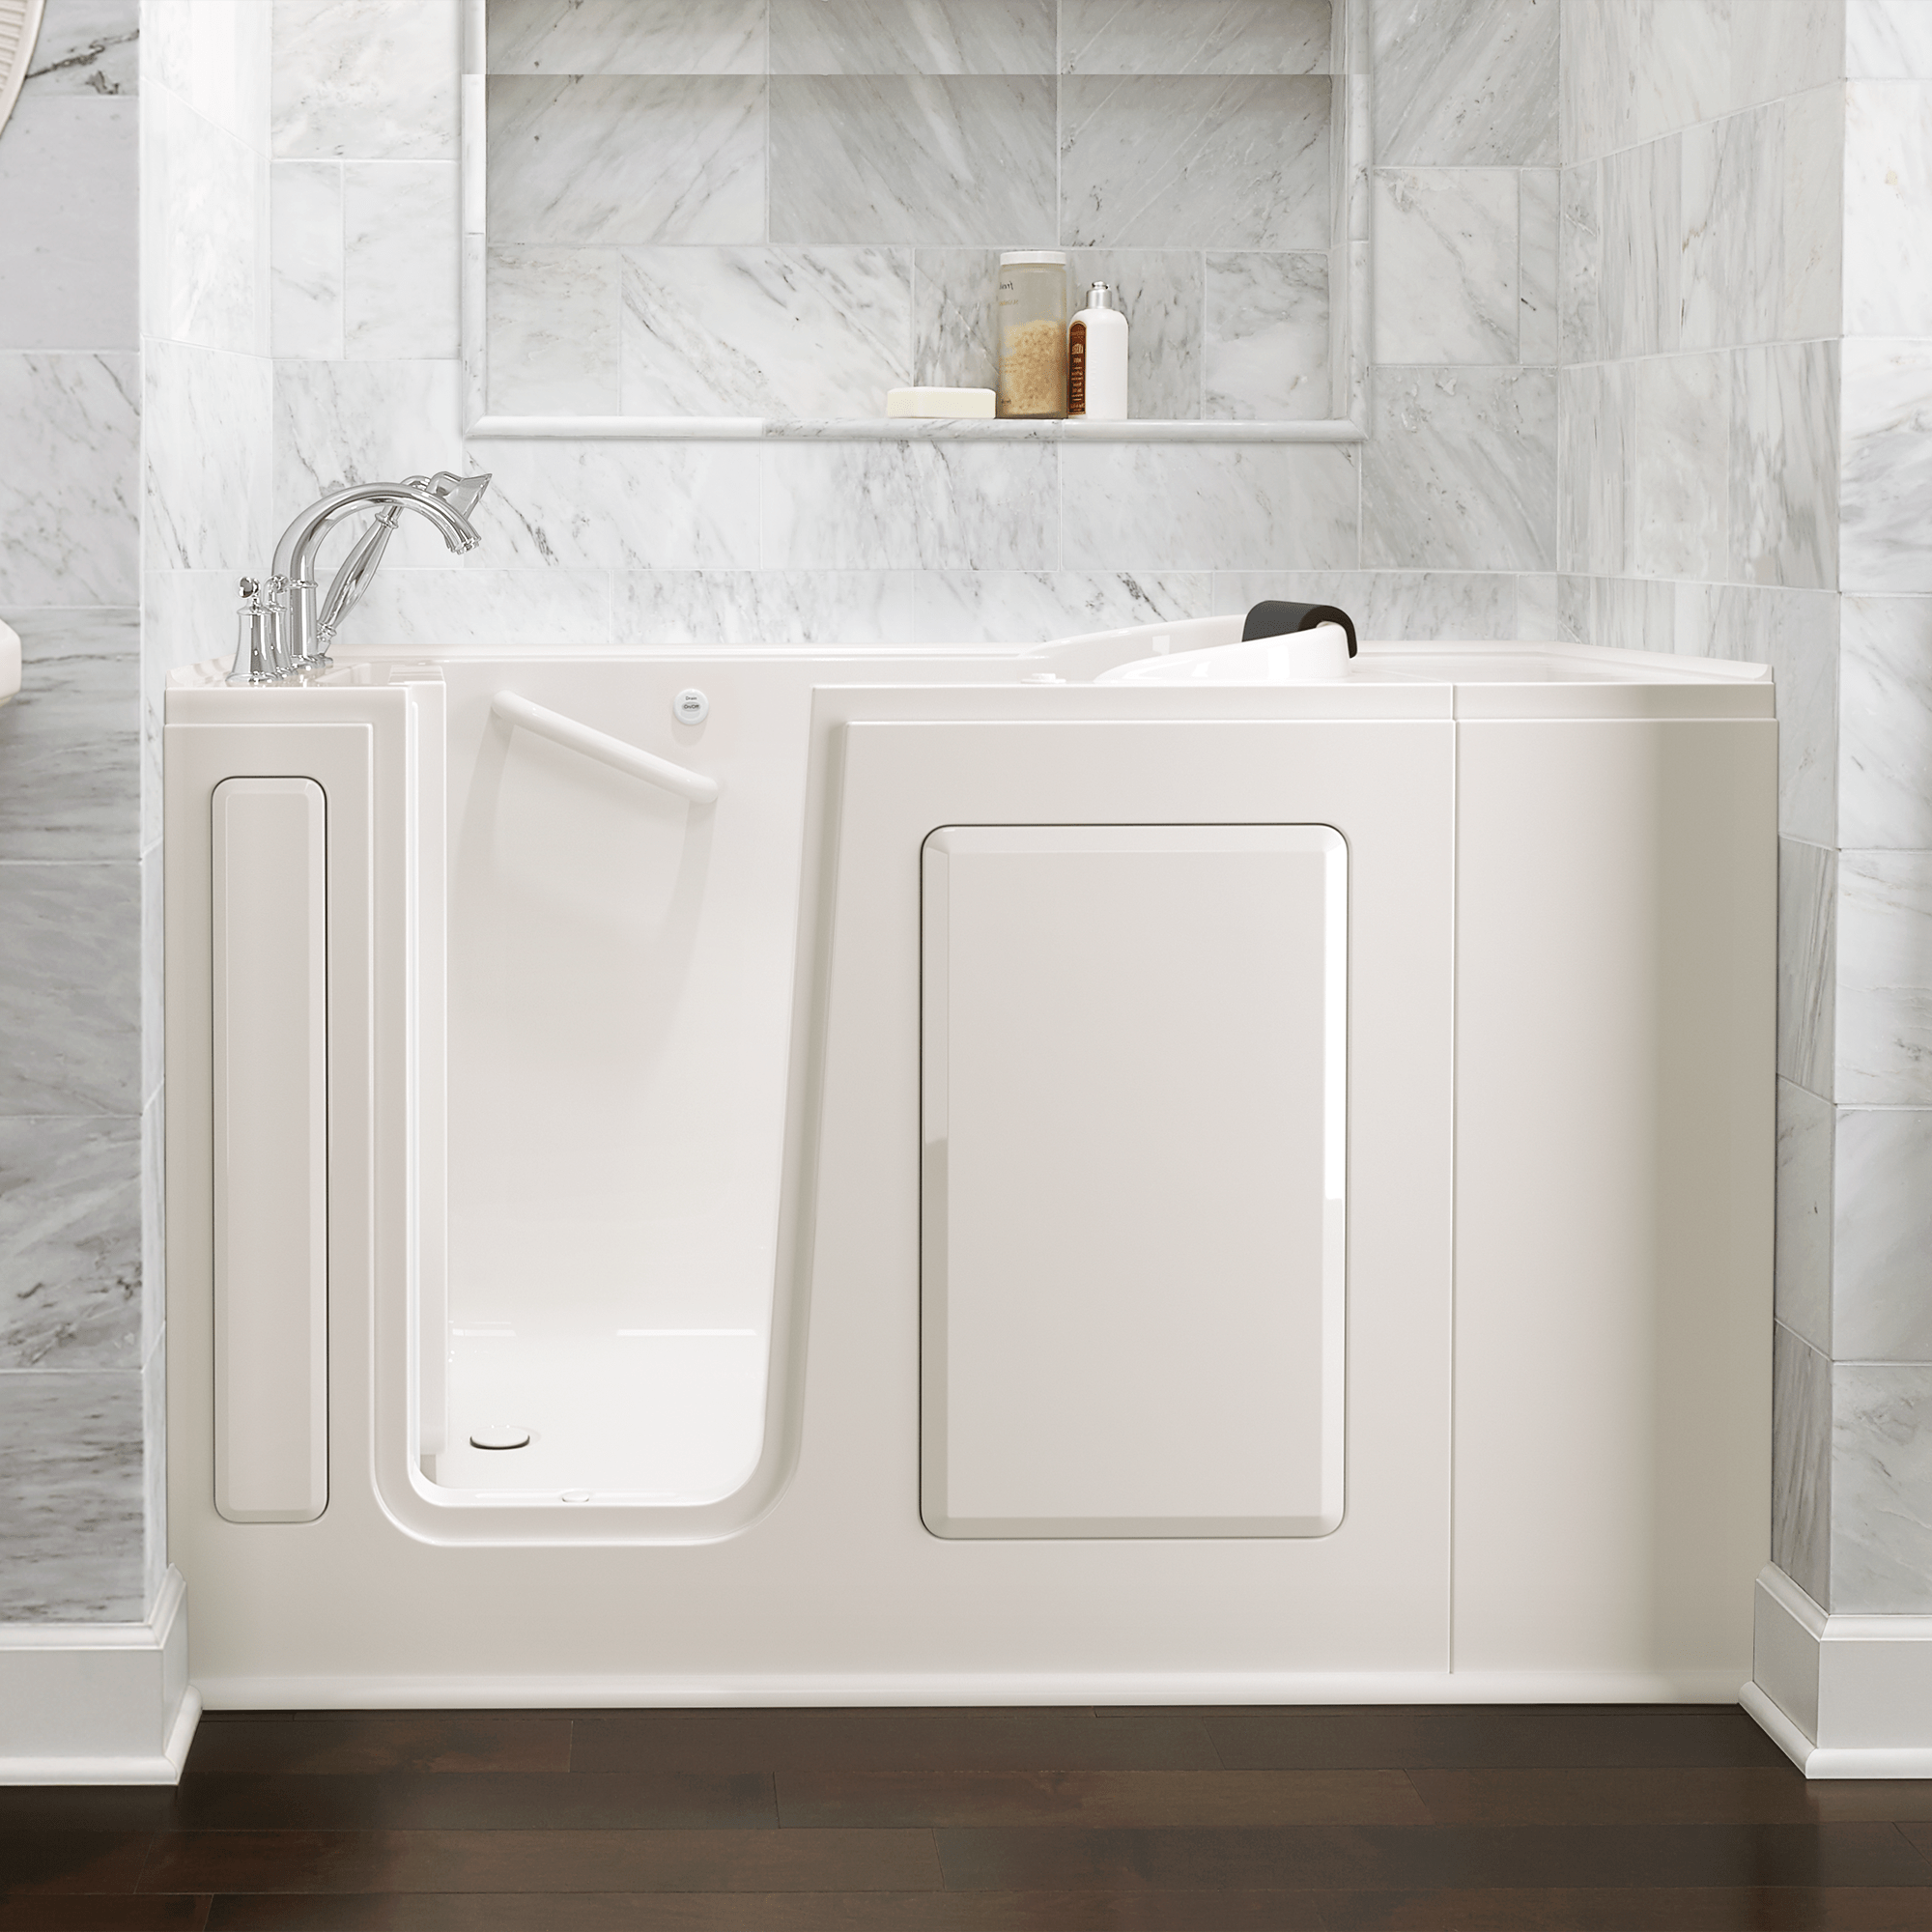 Gelcoat Premium Series 48x28 Inch Walk-In Bathtub with Air Massage System - Left Hand Door and Drain